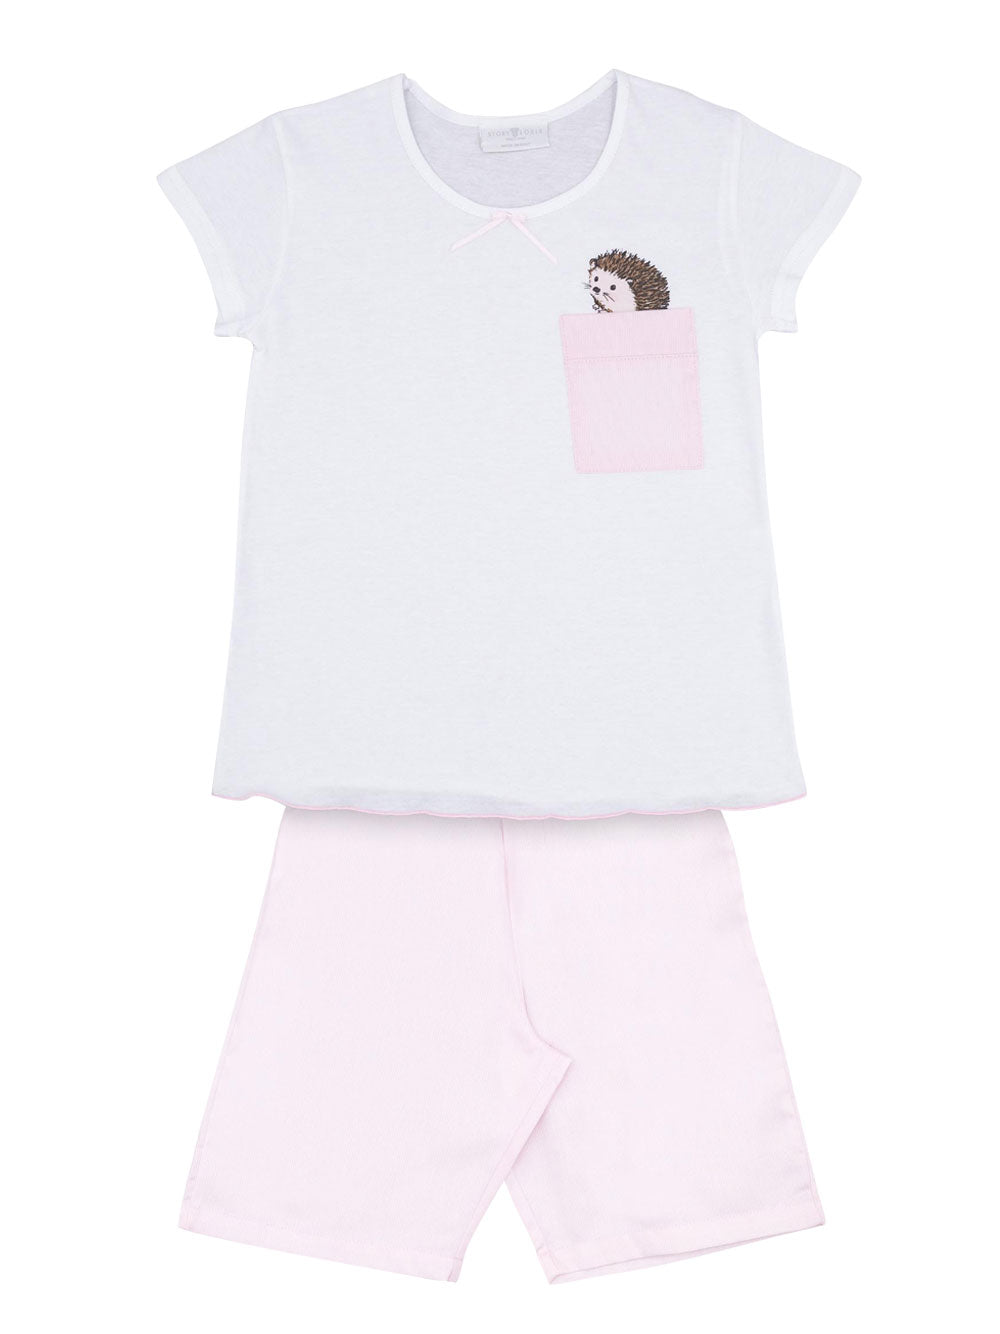 PREORDER: White x Pink Pyjama Set